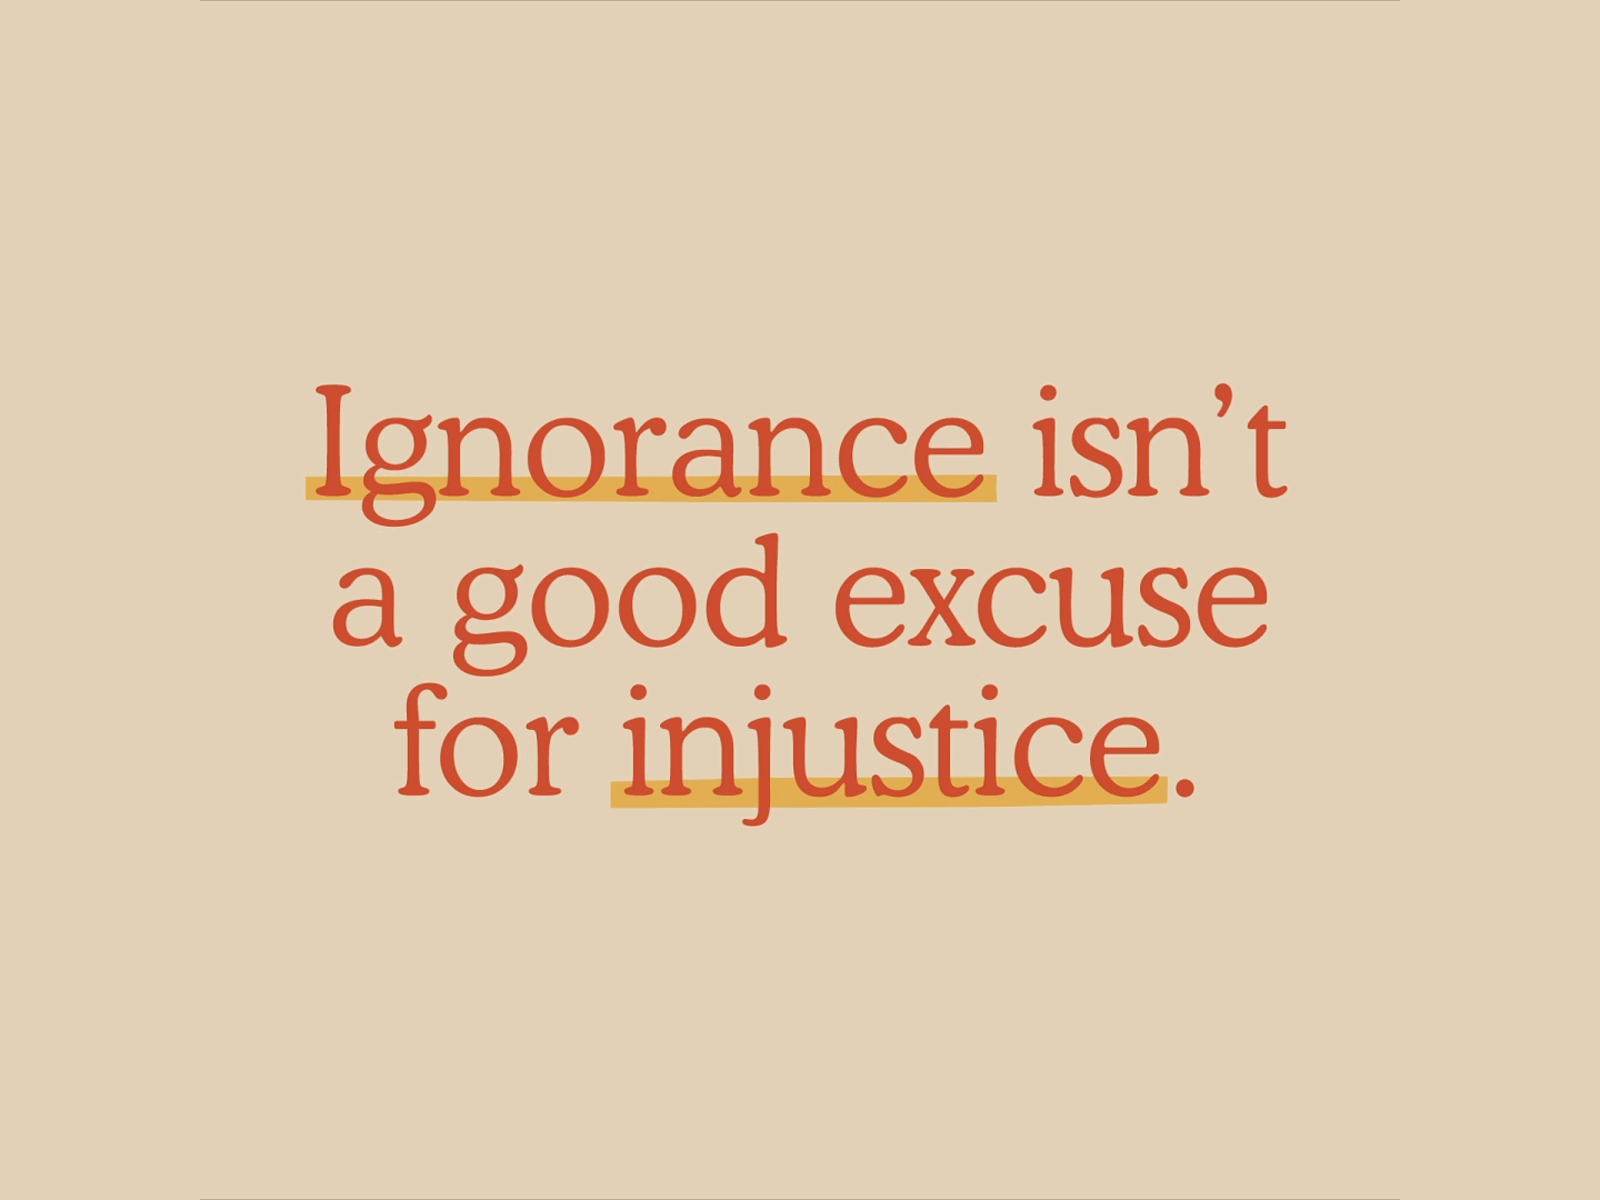 Ignorance isn't an excuse